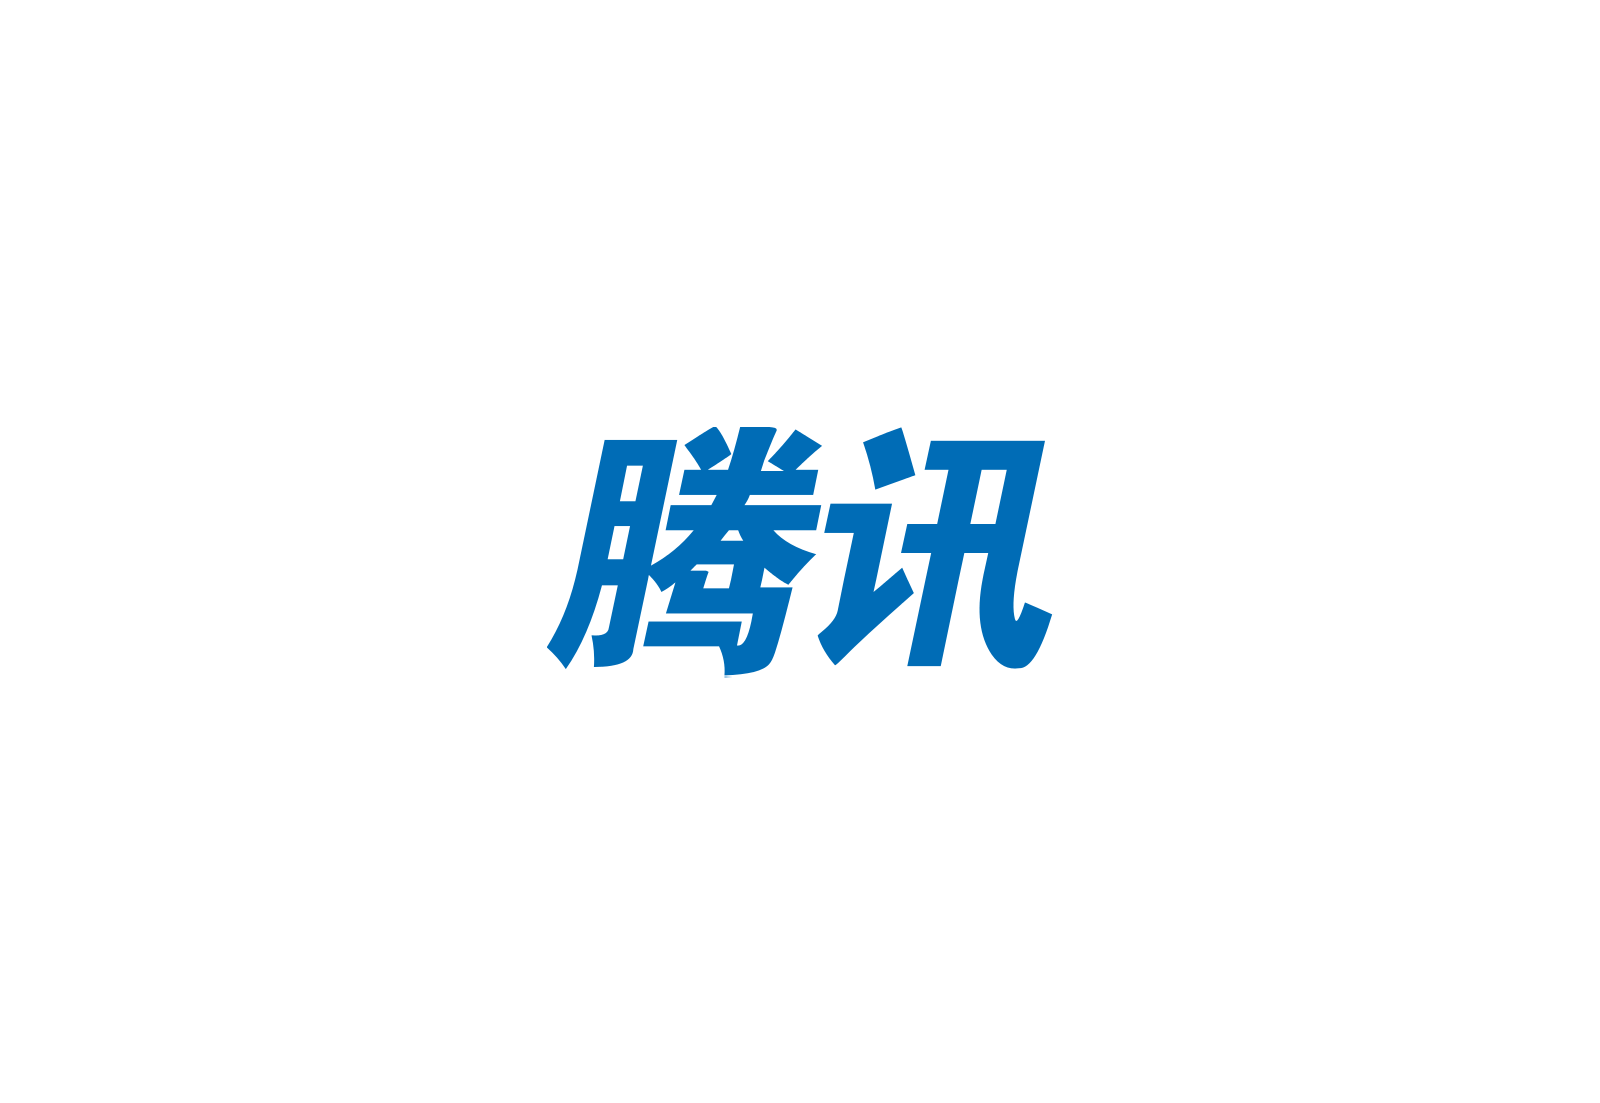 Tencent Holdings Logo - Tencent logo